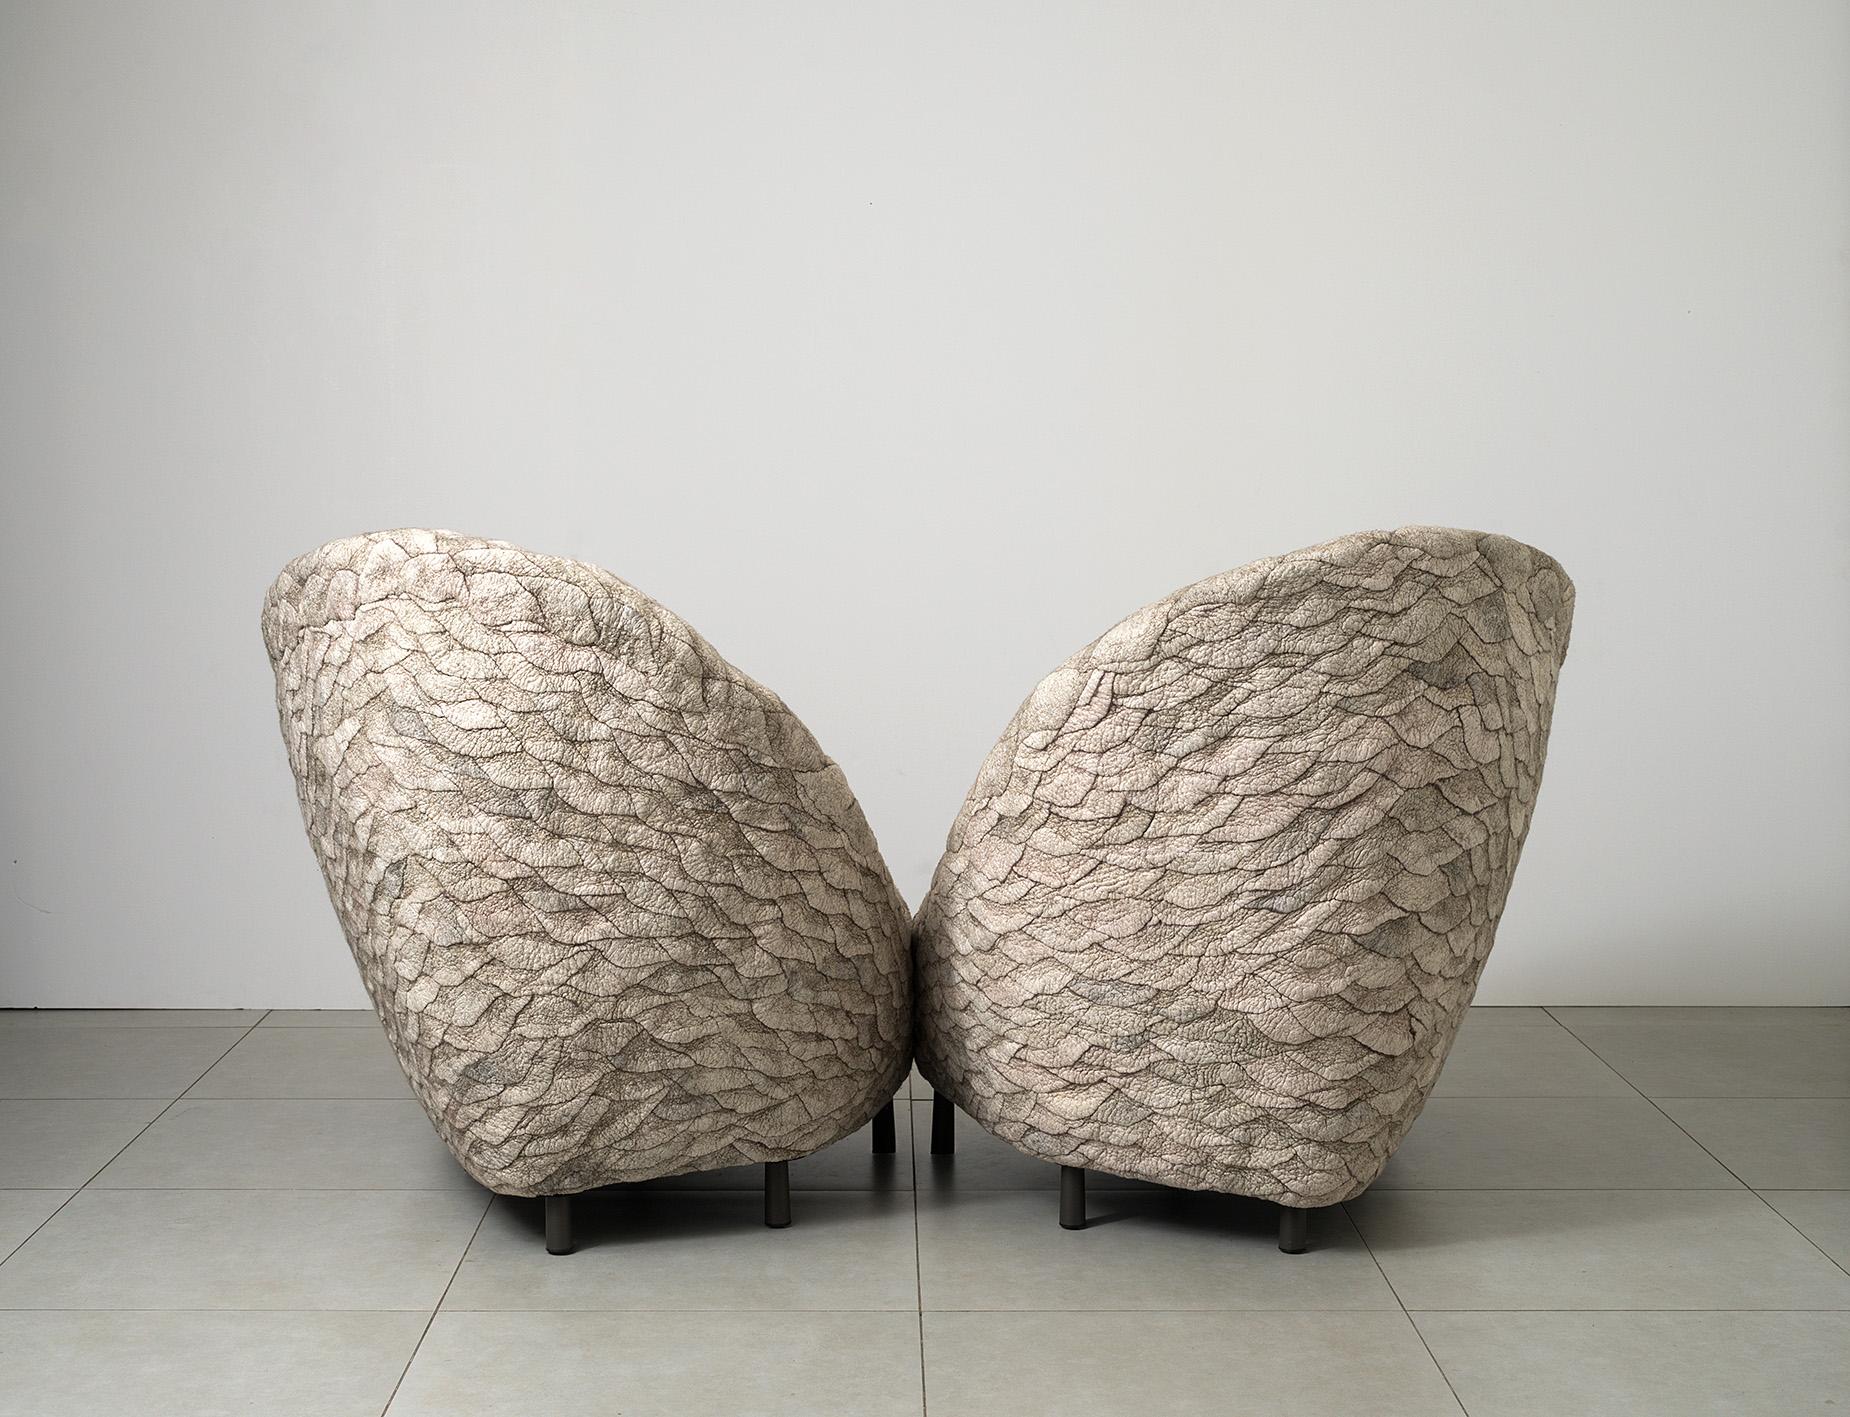 Wool Ayala Serfaty, Rapa Series: Conchas, Armchairs with Shared Ottoman, Israel, 2020 For Sale